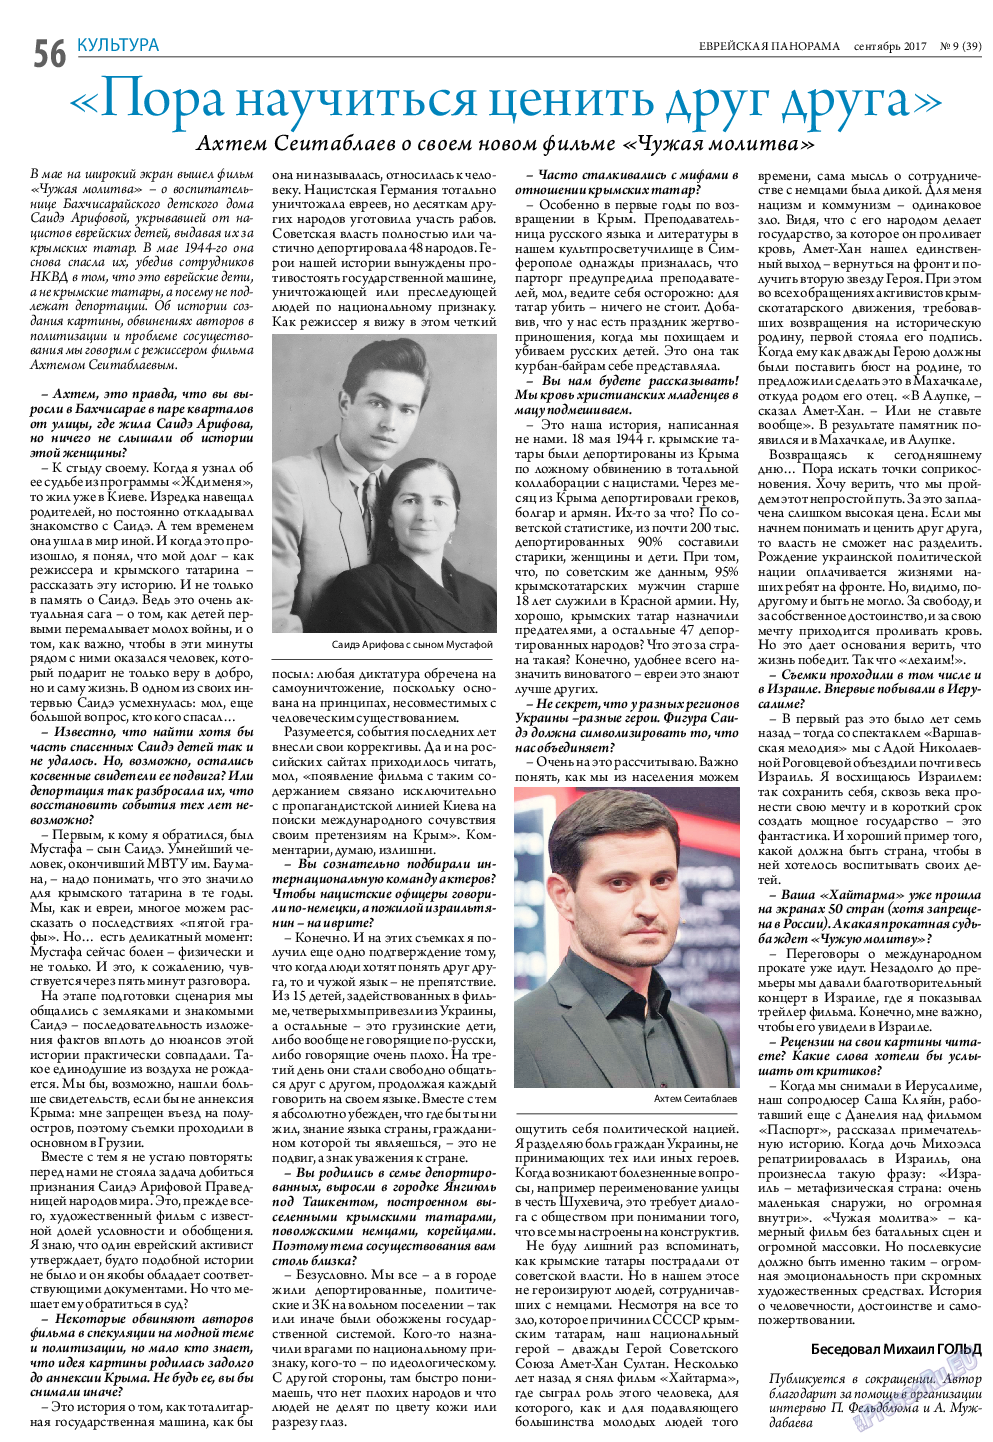 Еврейская панорама, газета. 2017 №9 стр.56